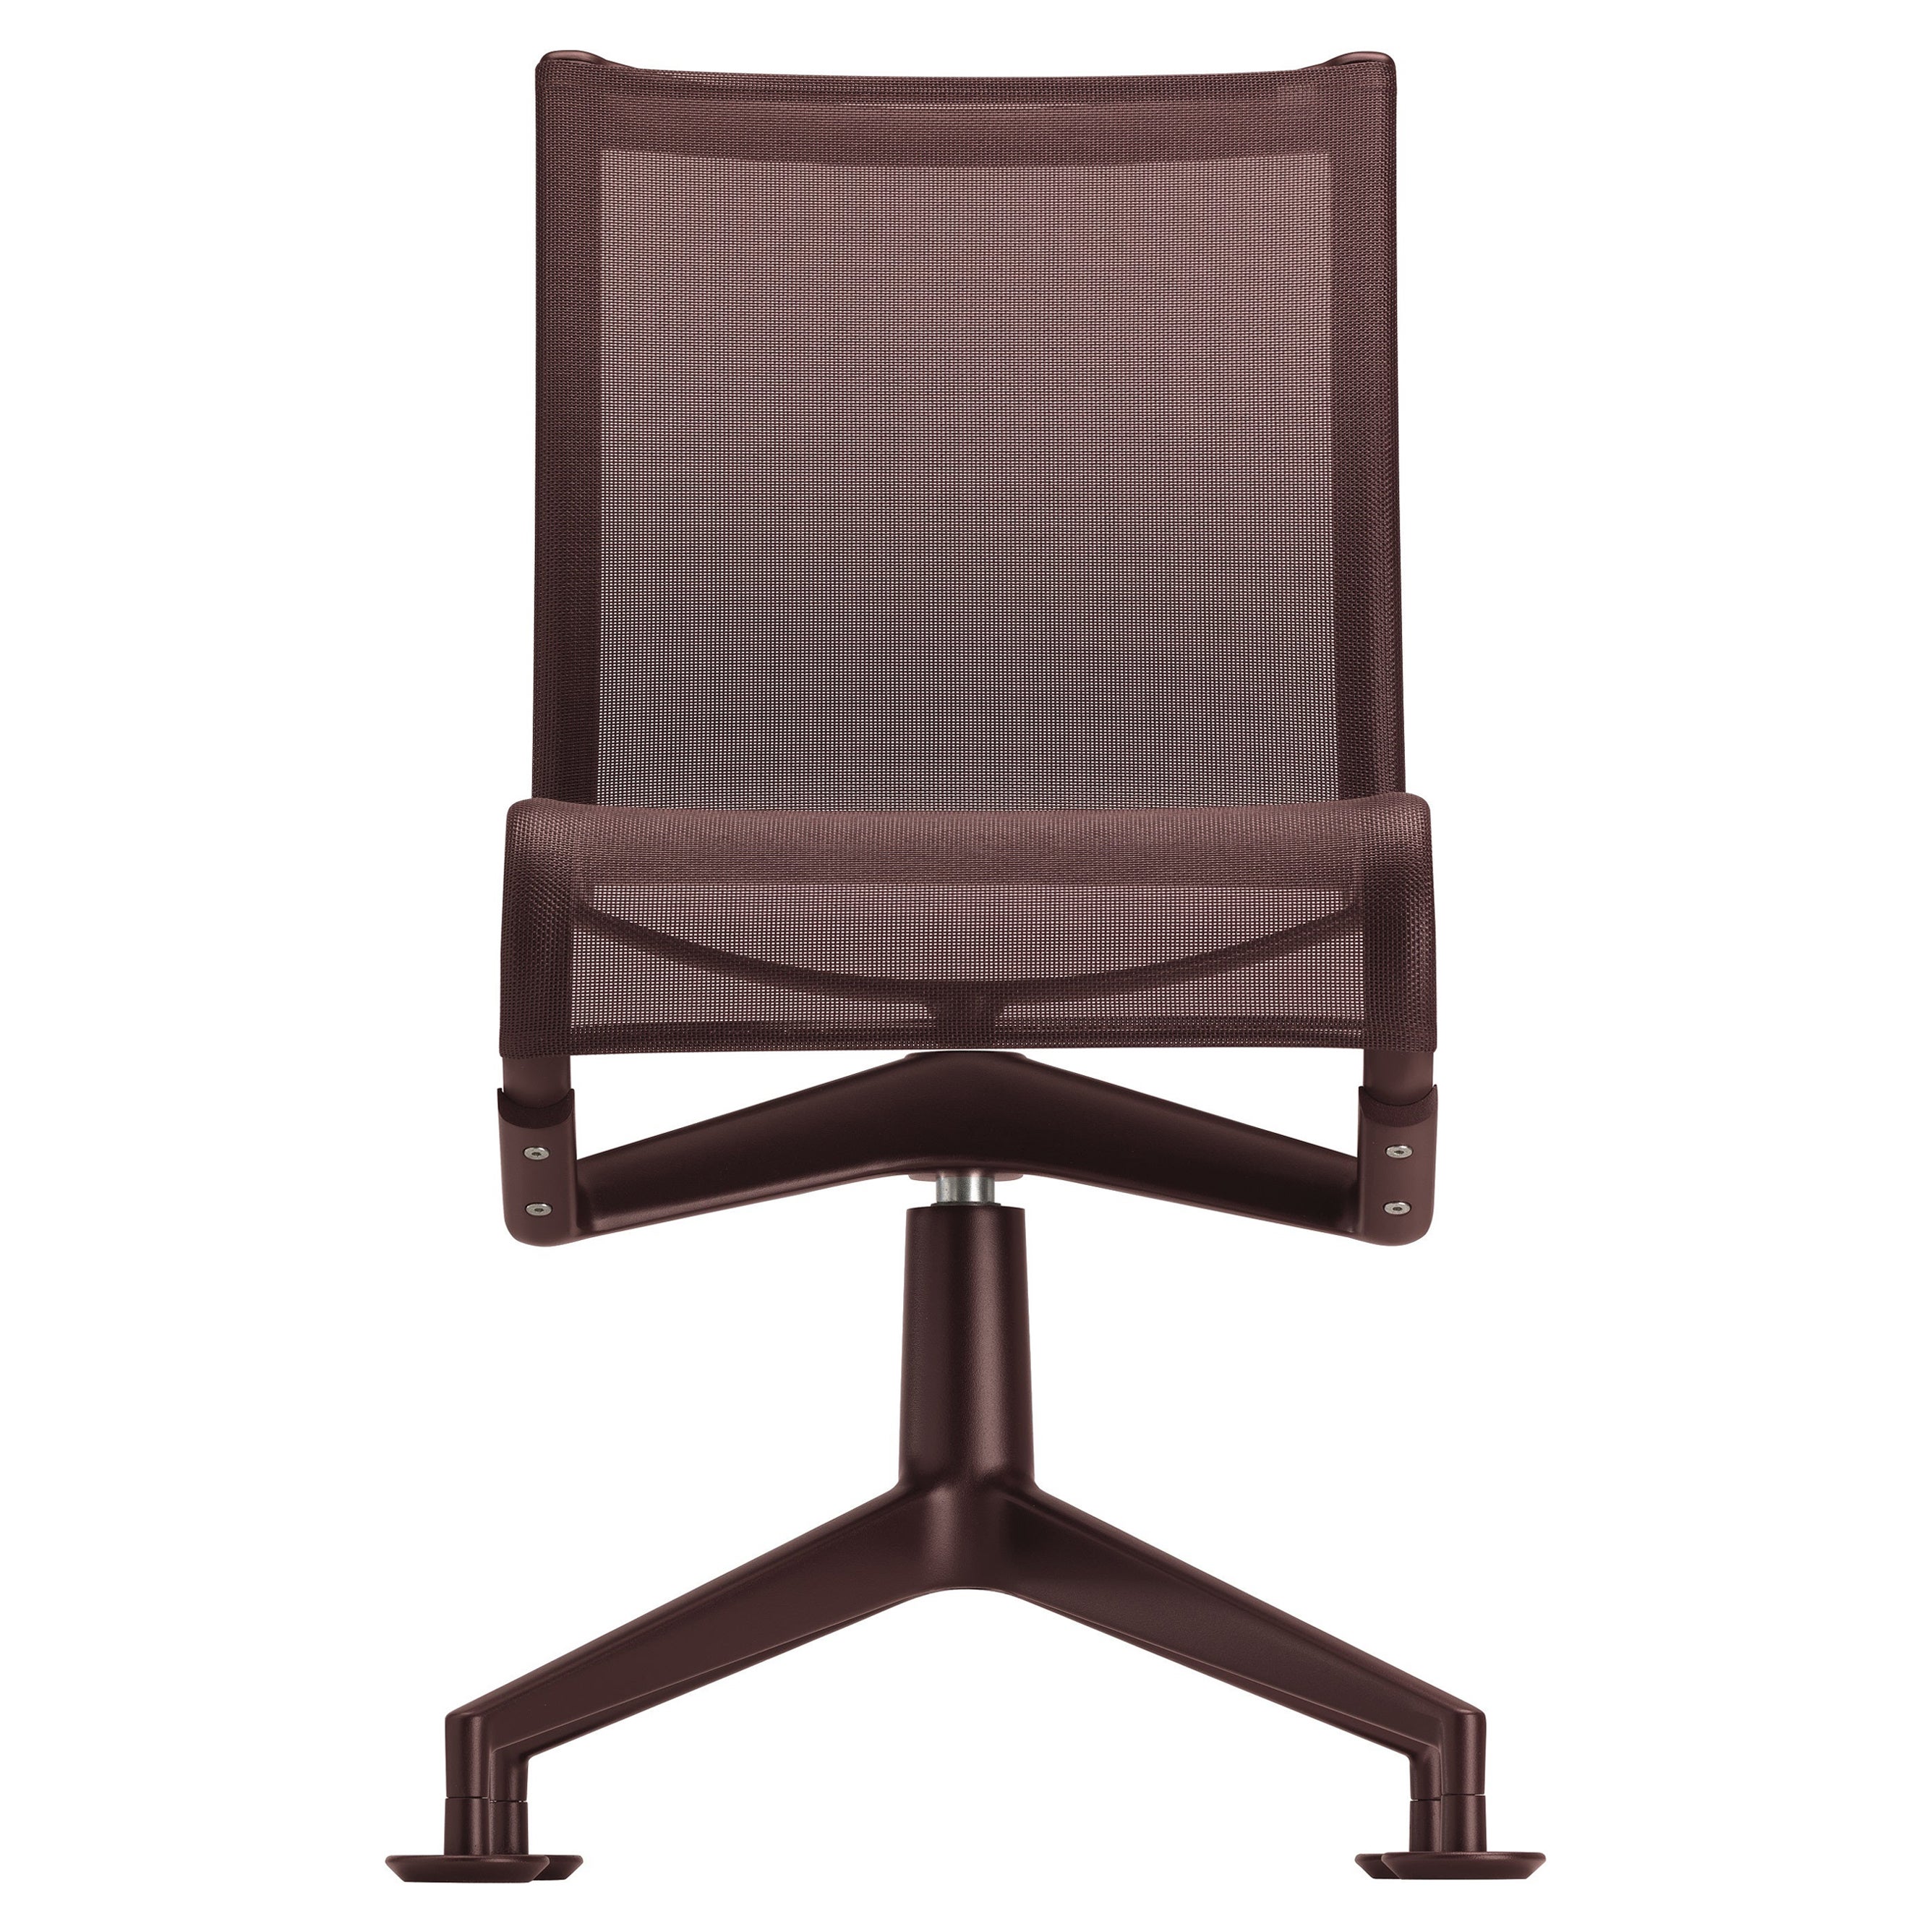 meetingframe 44, Stuhl in Aubergine-Stil mit lackiertem Aluminiumrahmen im Angebot